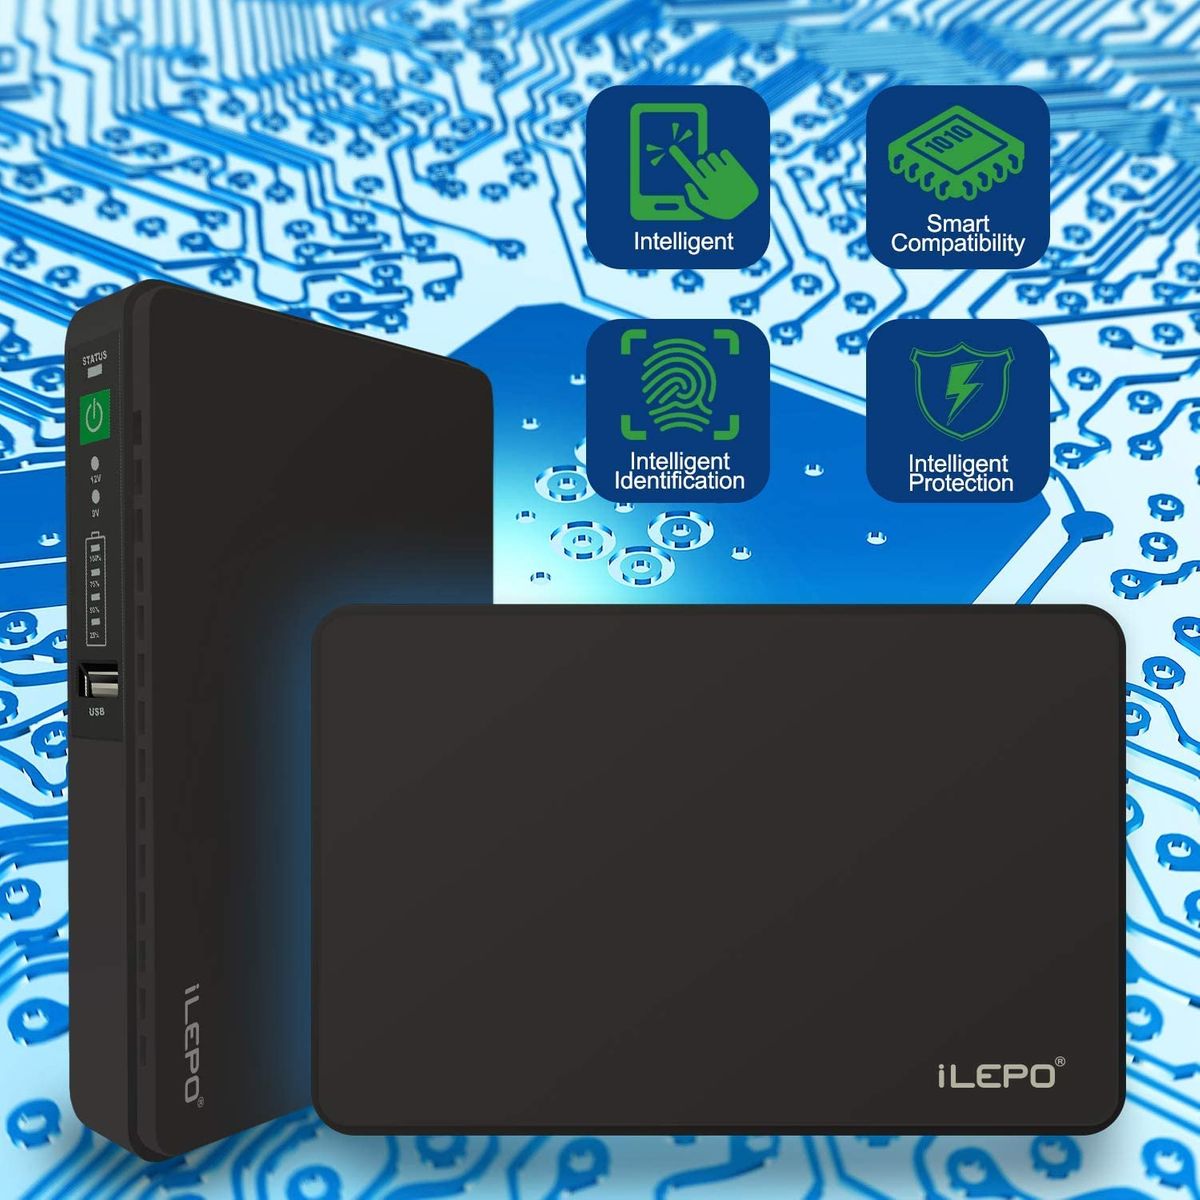 iNepo Mini ups Uninterruptible Power Supply for Wireless Router, Modem, Camera. (Black)